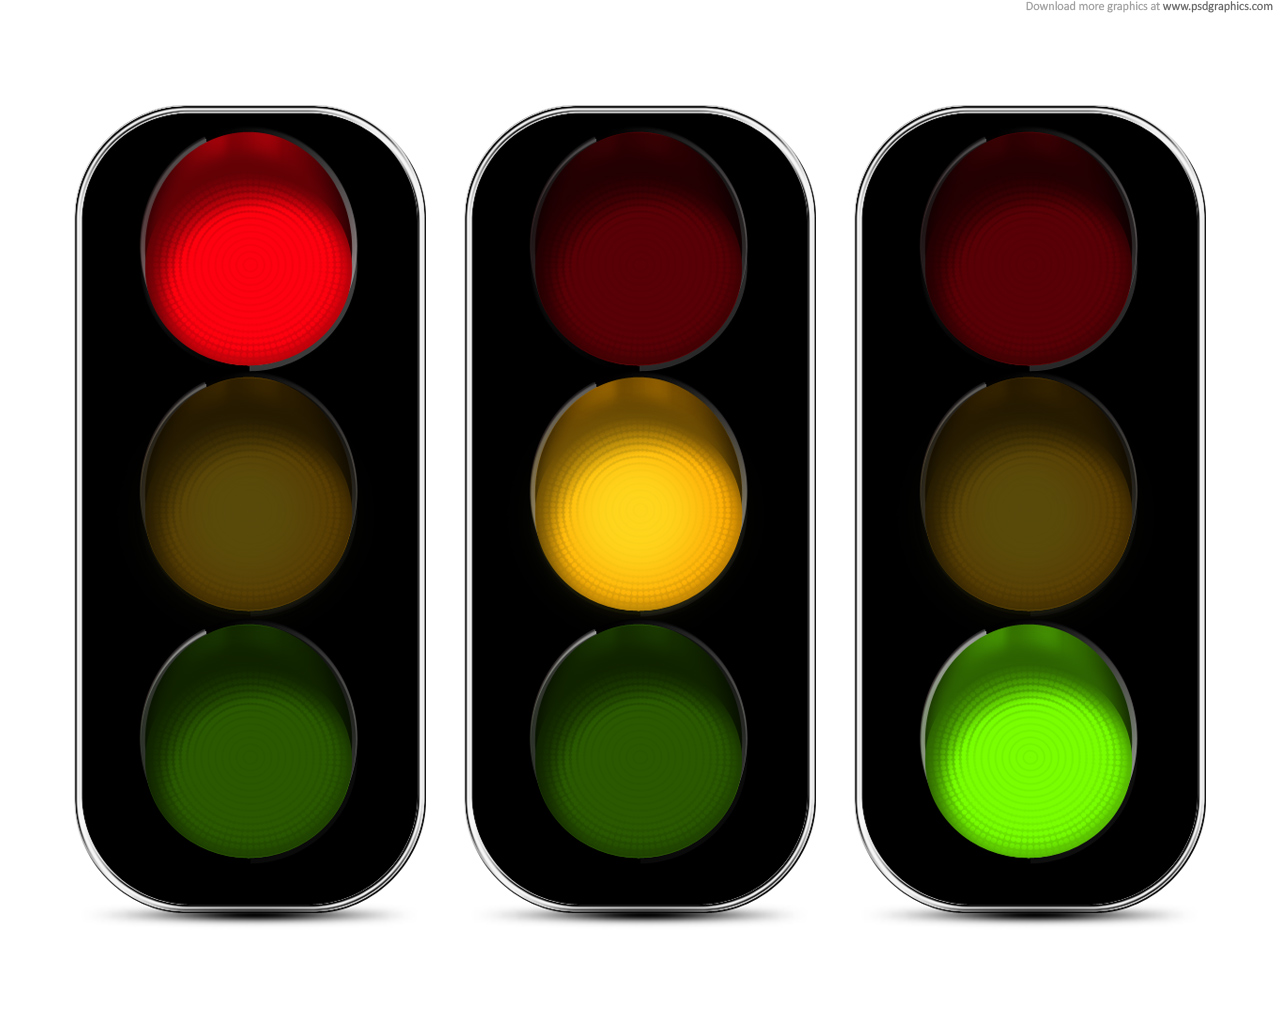 Green traffic light clipart k